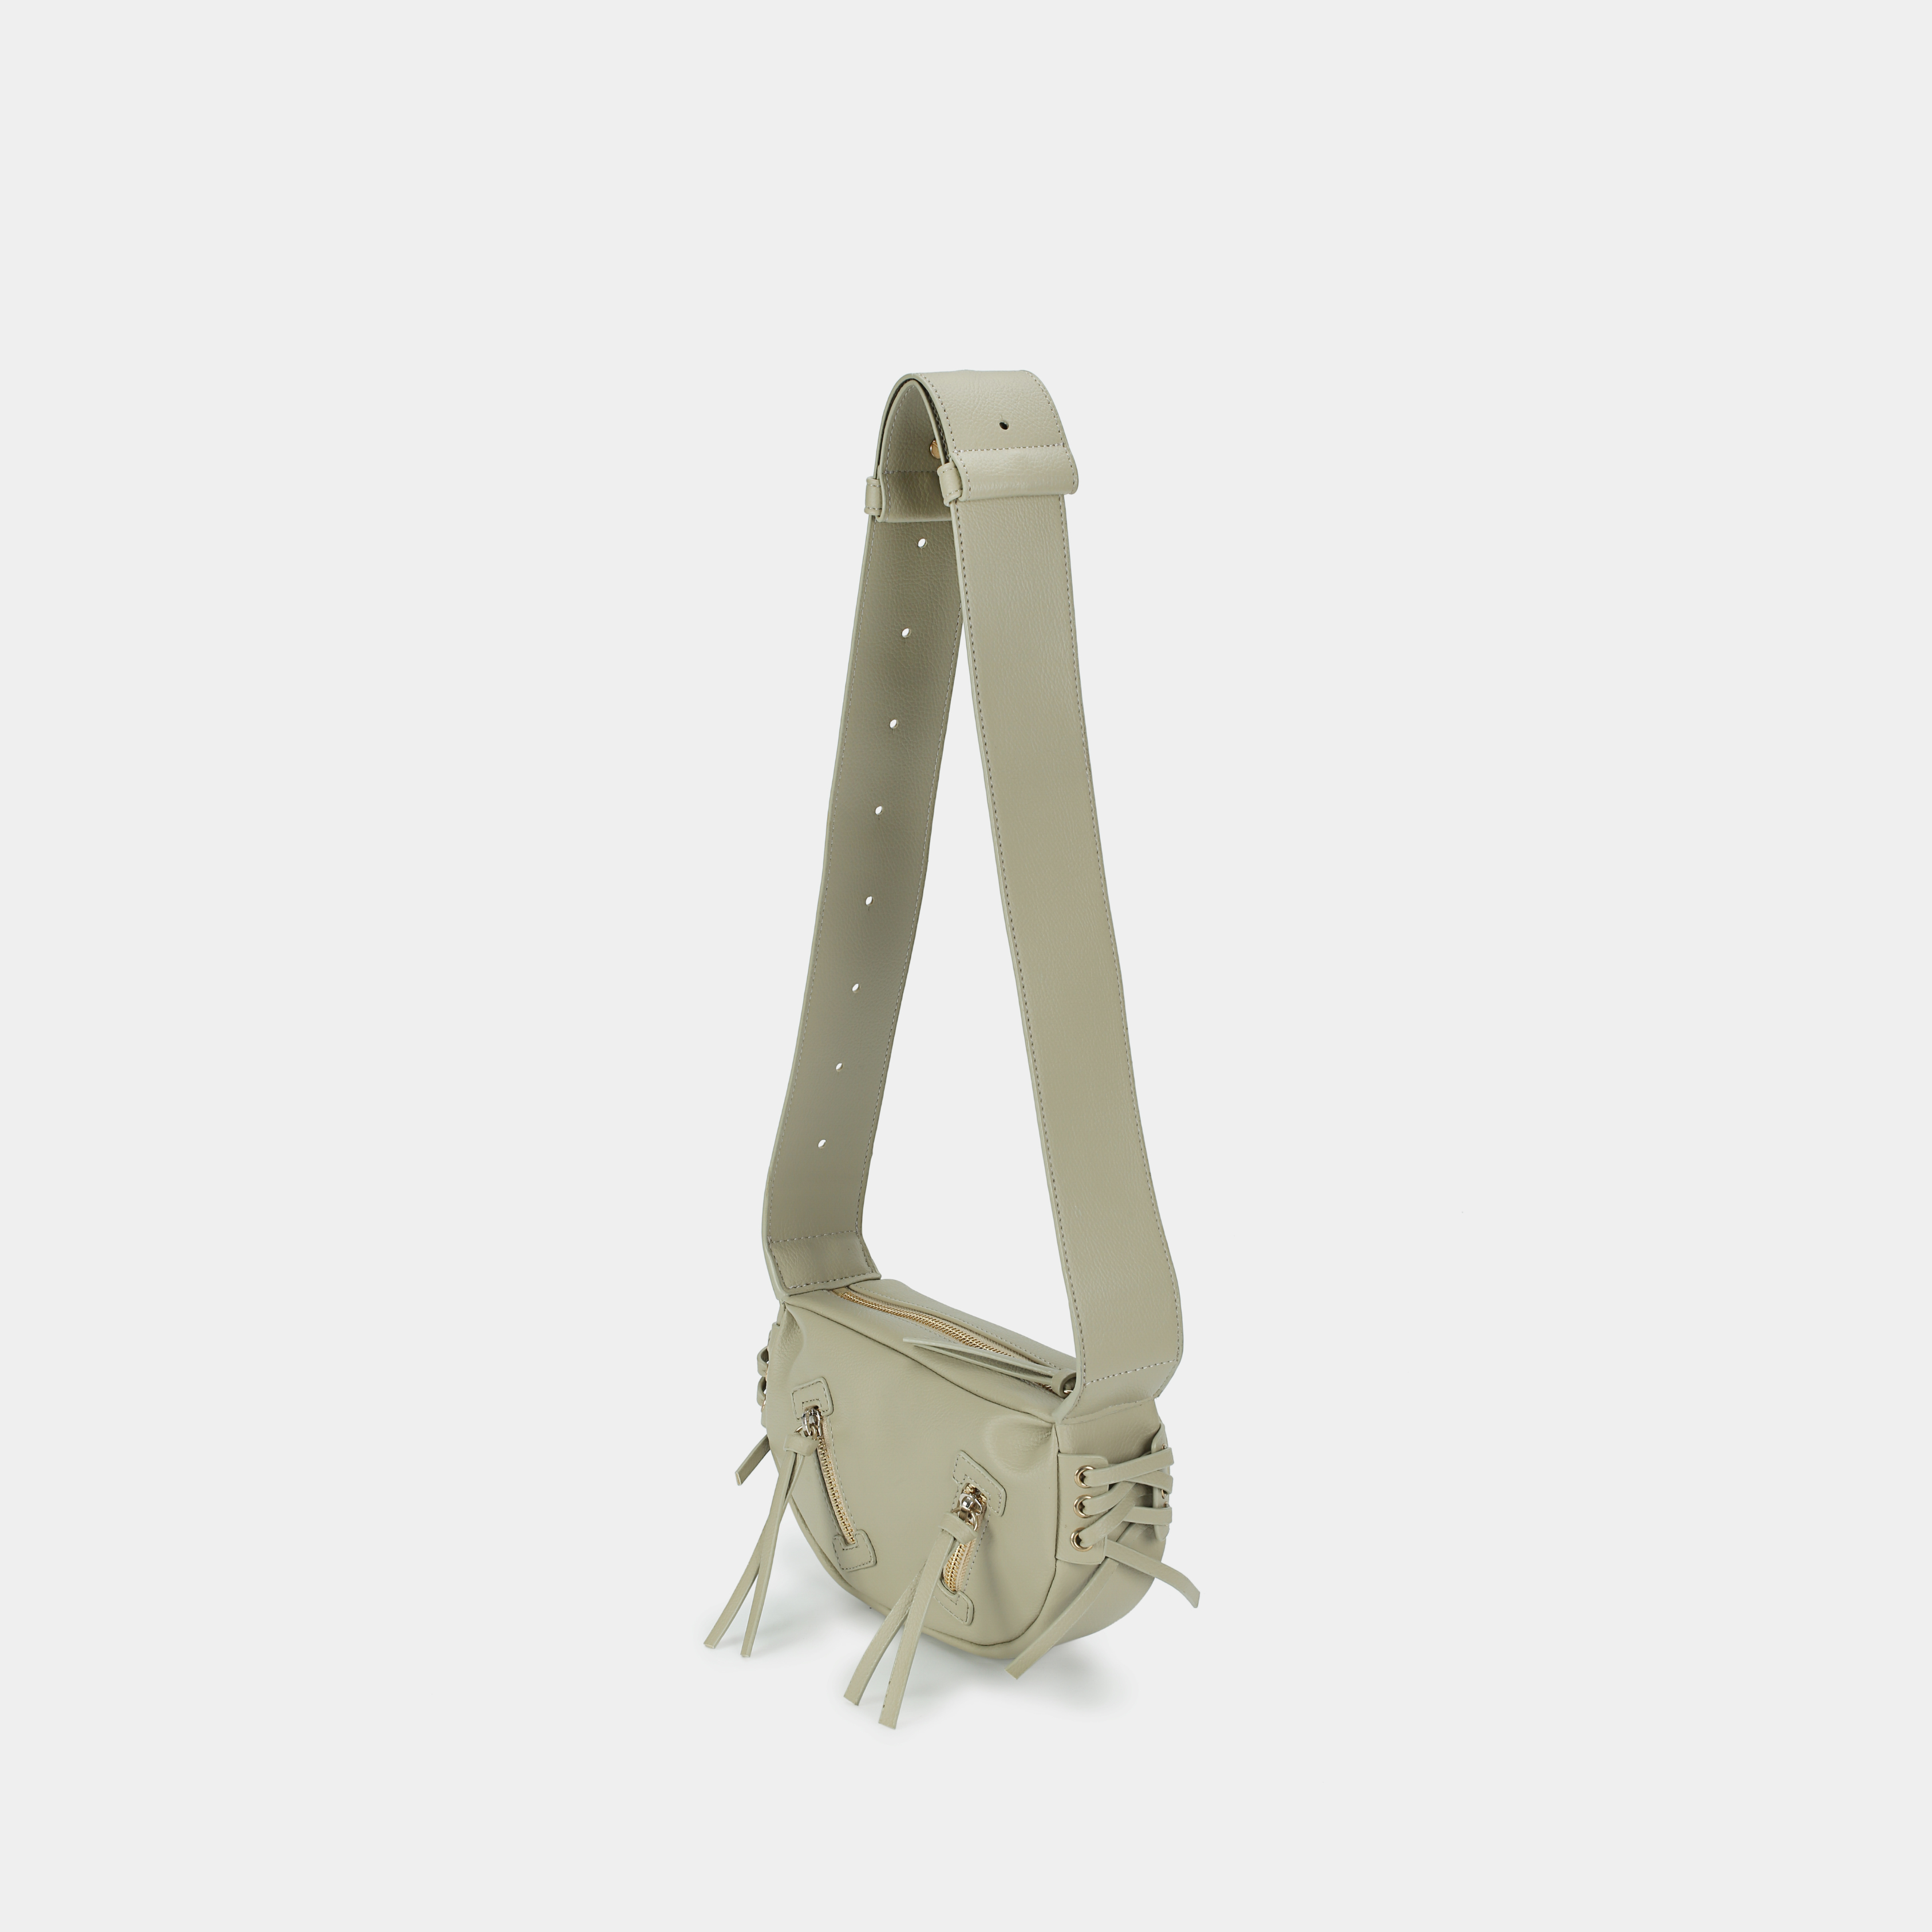 LACE bag small size (S) beige color